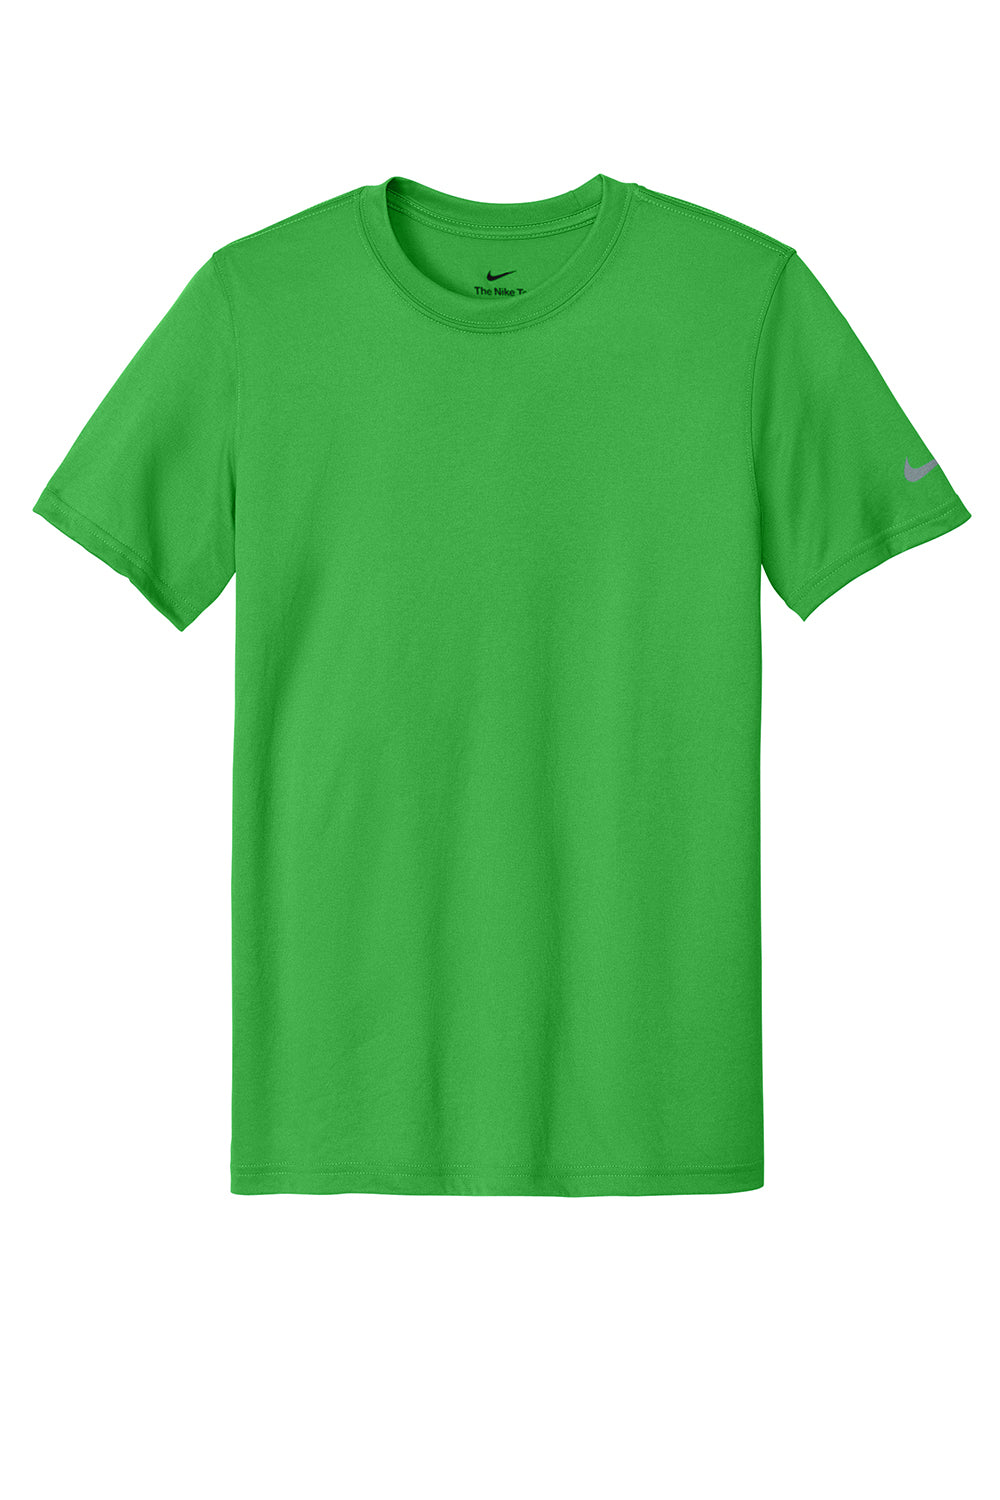 Nike NKDX8730 Mens rLegend Dri-Fit Moisture Wicking Short Sleeve Crewneck T-Shirt Apple Green Flat Front